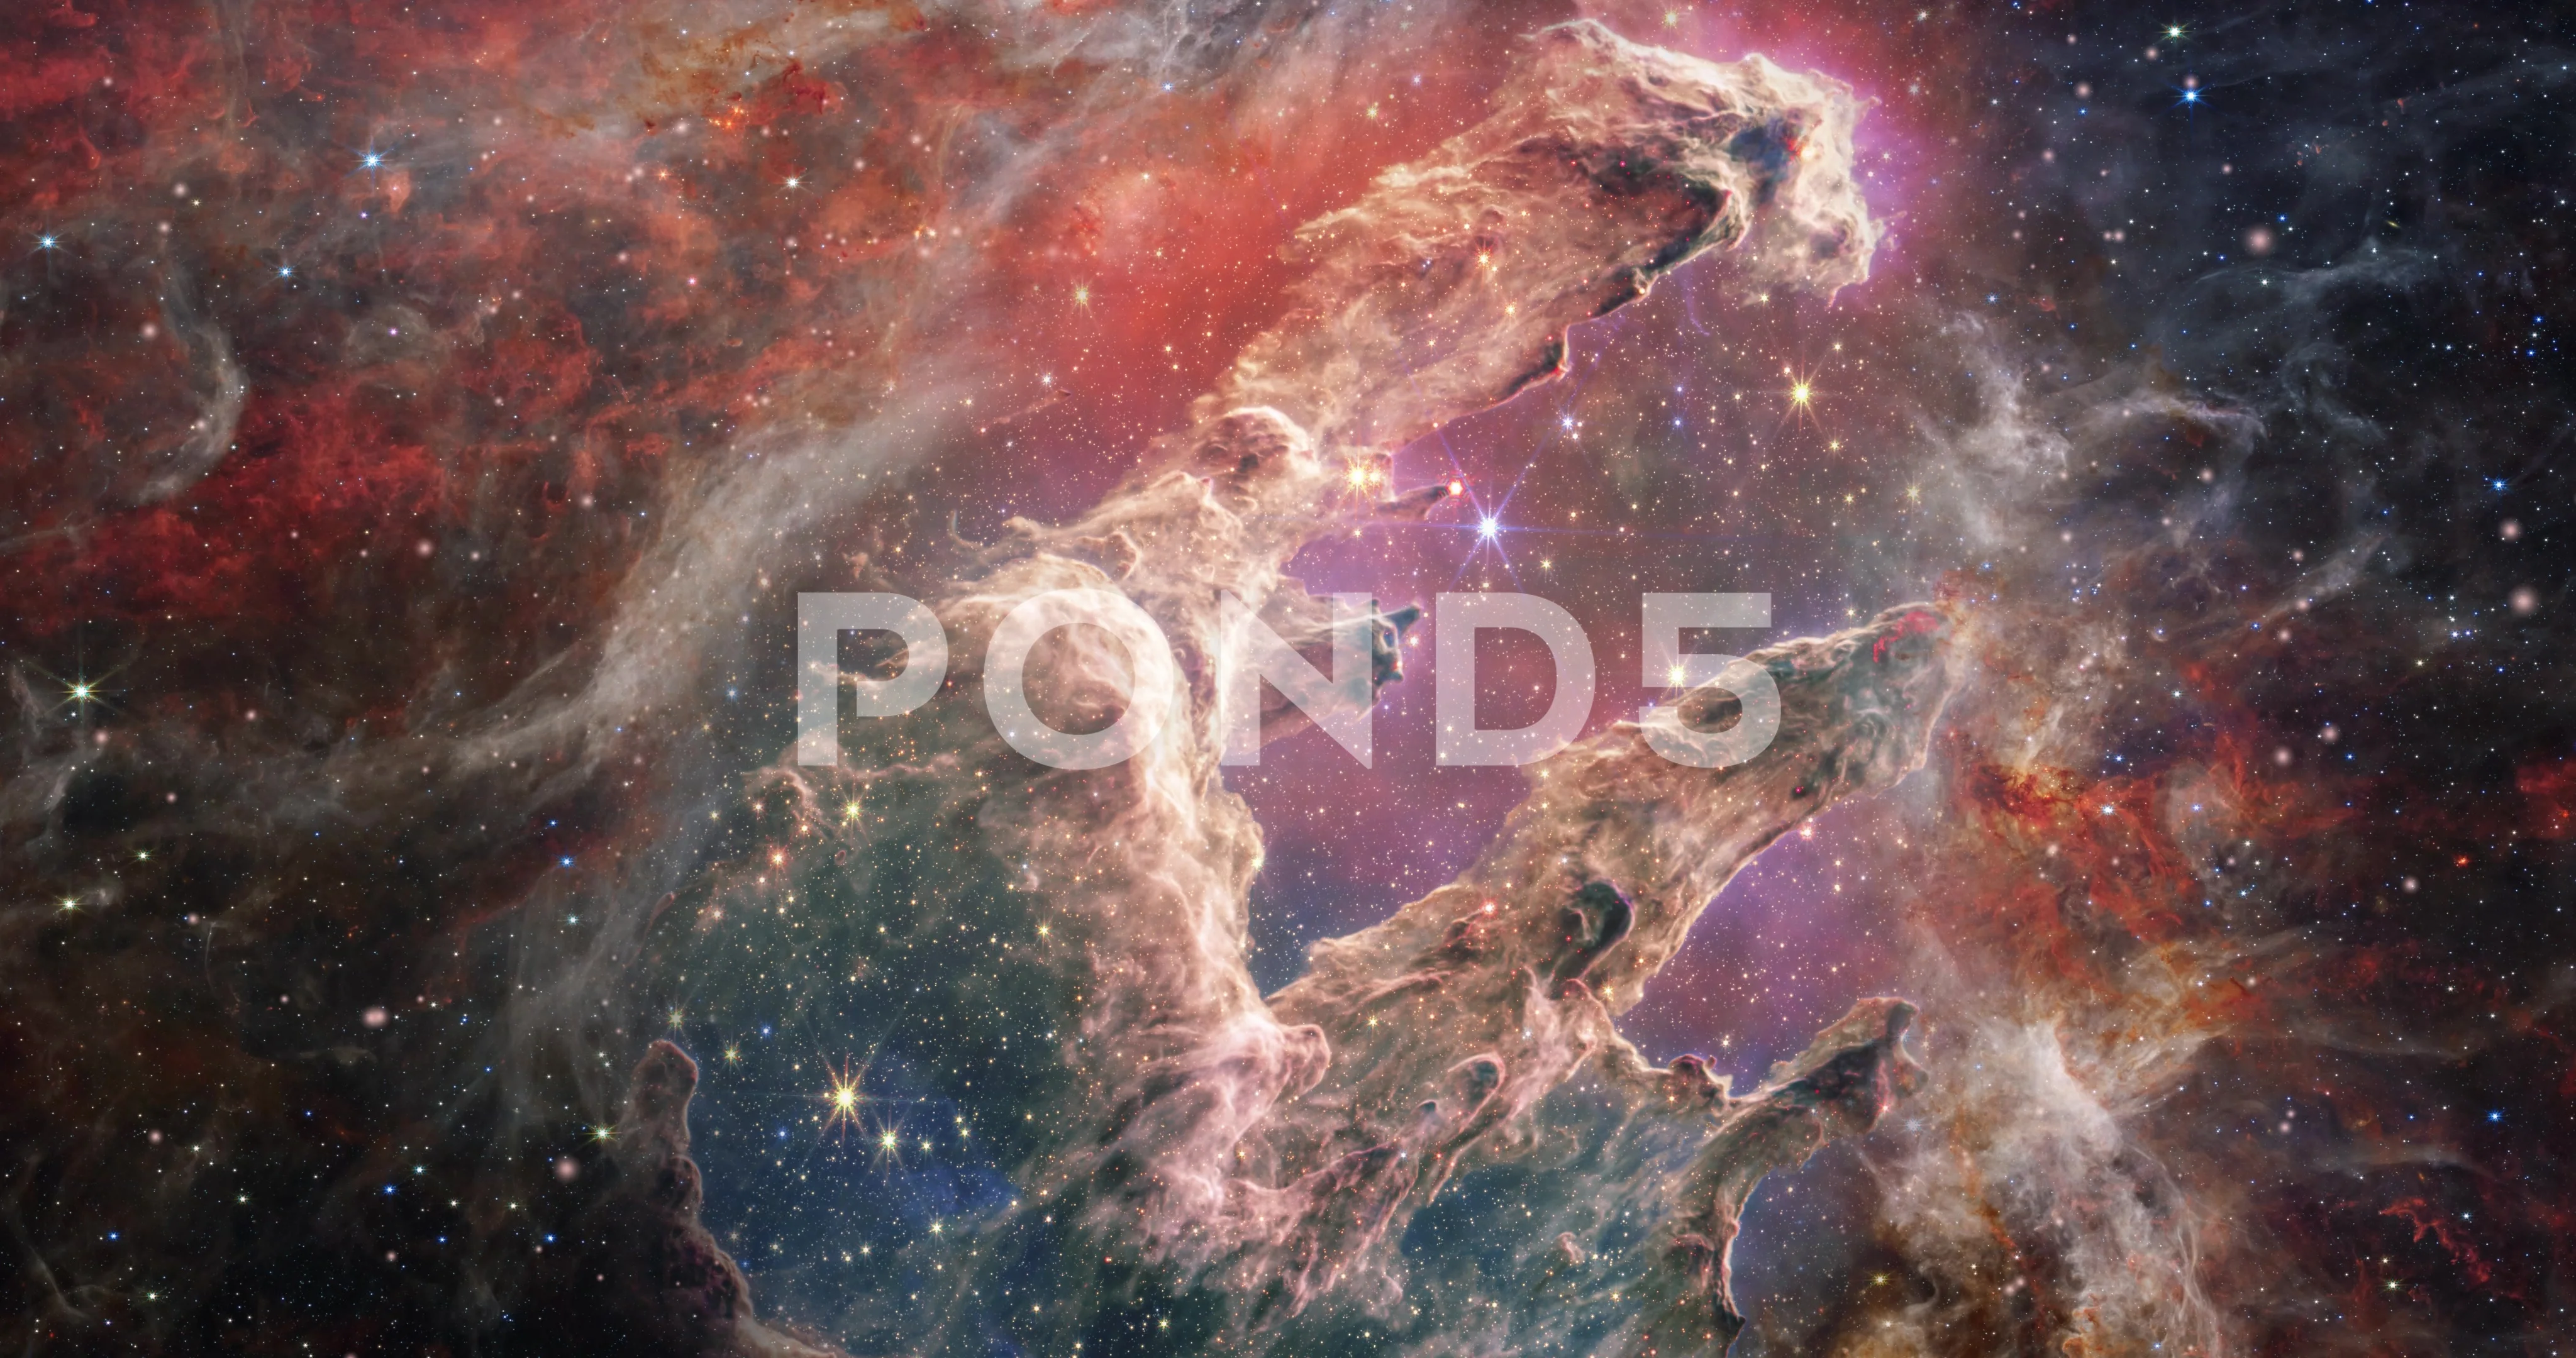 Eagle nebula with the Pillars of Creation Illustration based on Hubble  Space Telescope imagery stock photo  OFFSET